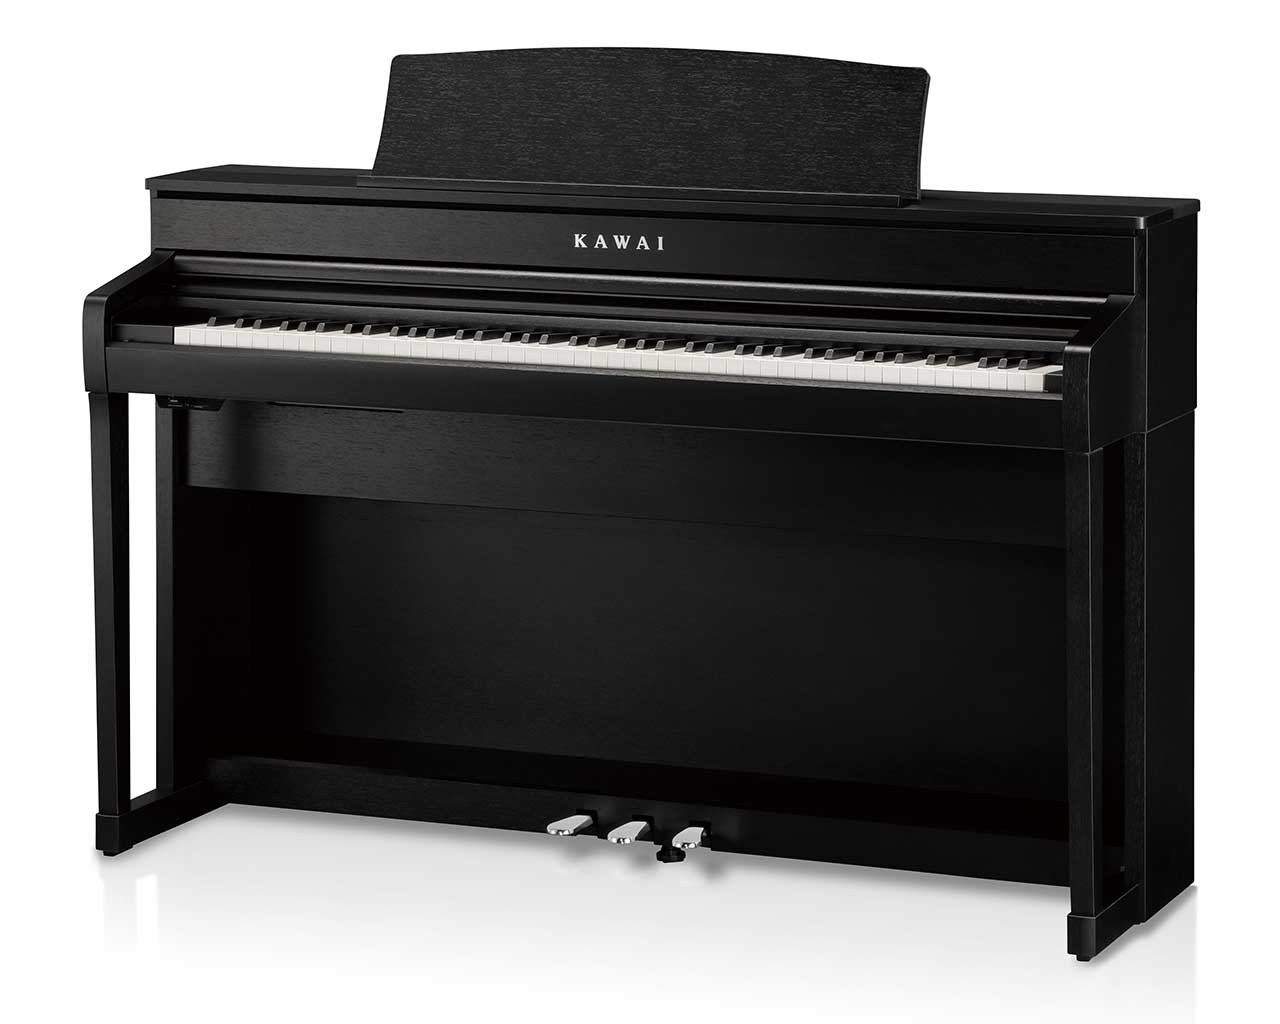 Kawai-CA-701-B-Digitalpiano-schwarz-Pianohaus-Filipski